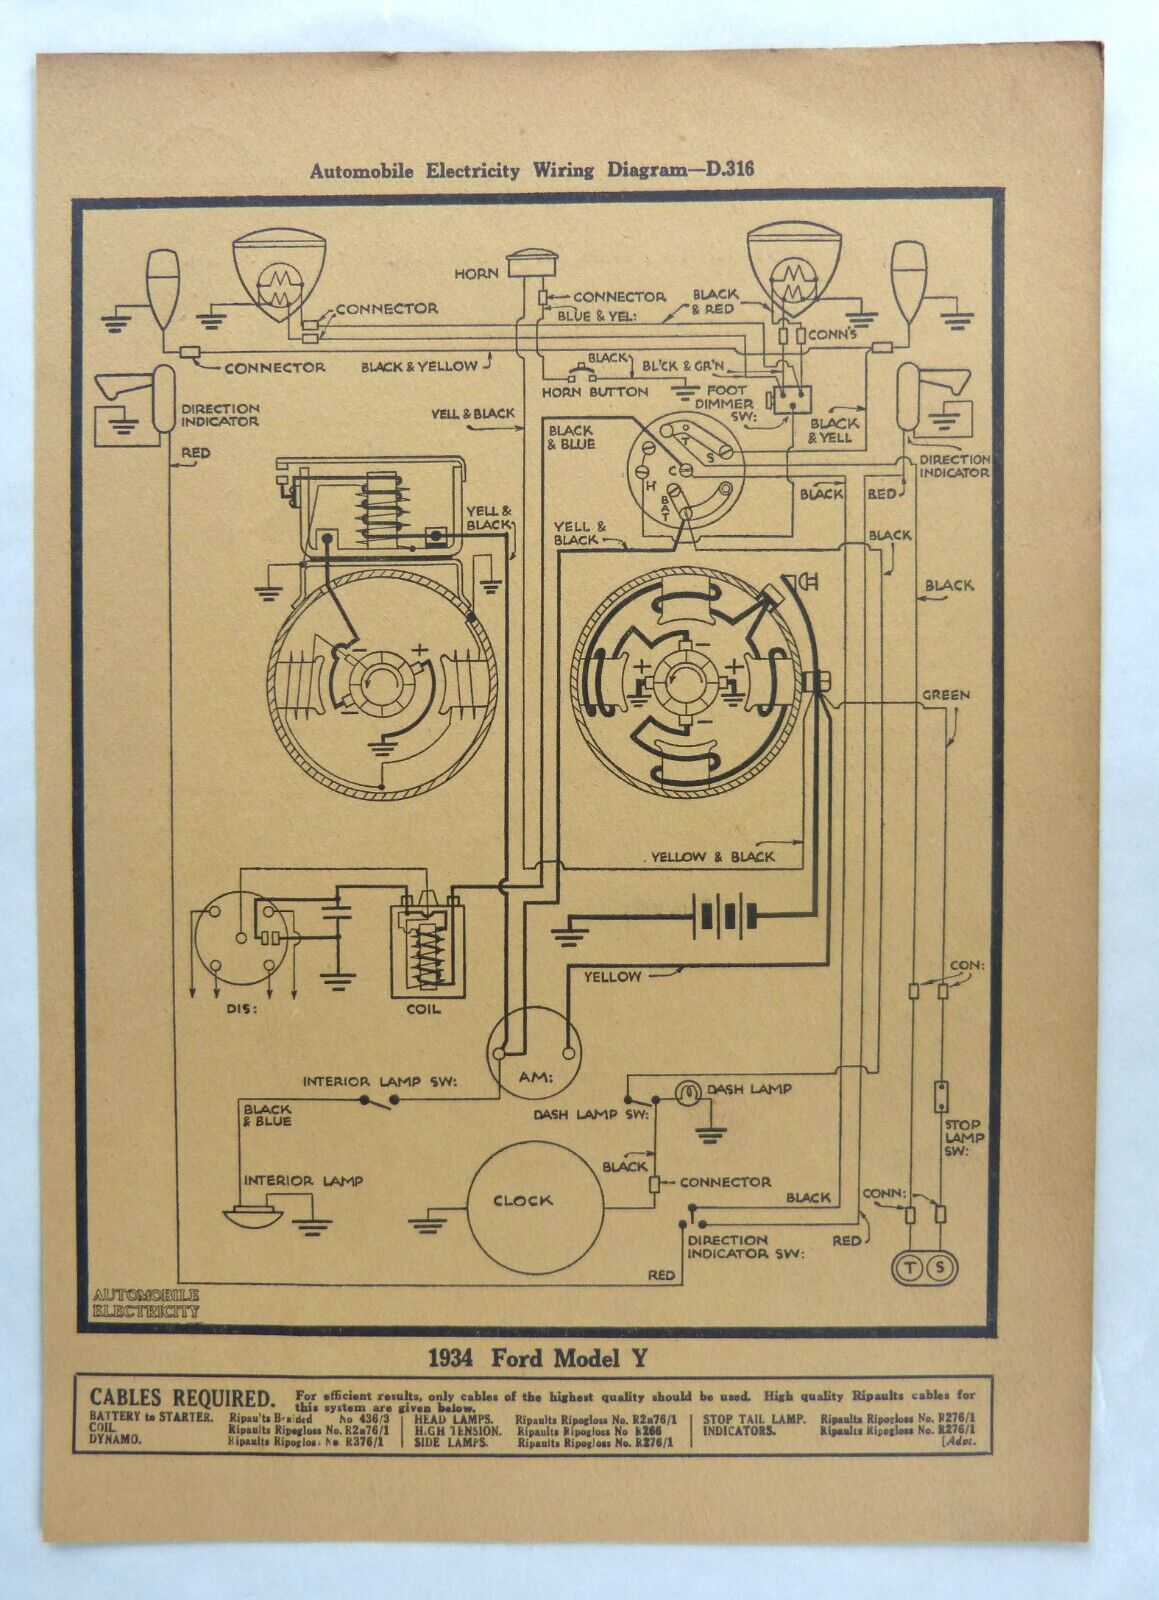 Original Automobile Electricity Ford Model Y Wiring Diagram 1934 D316